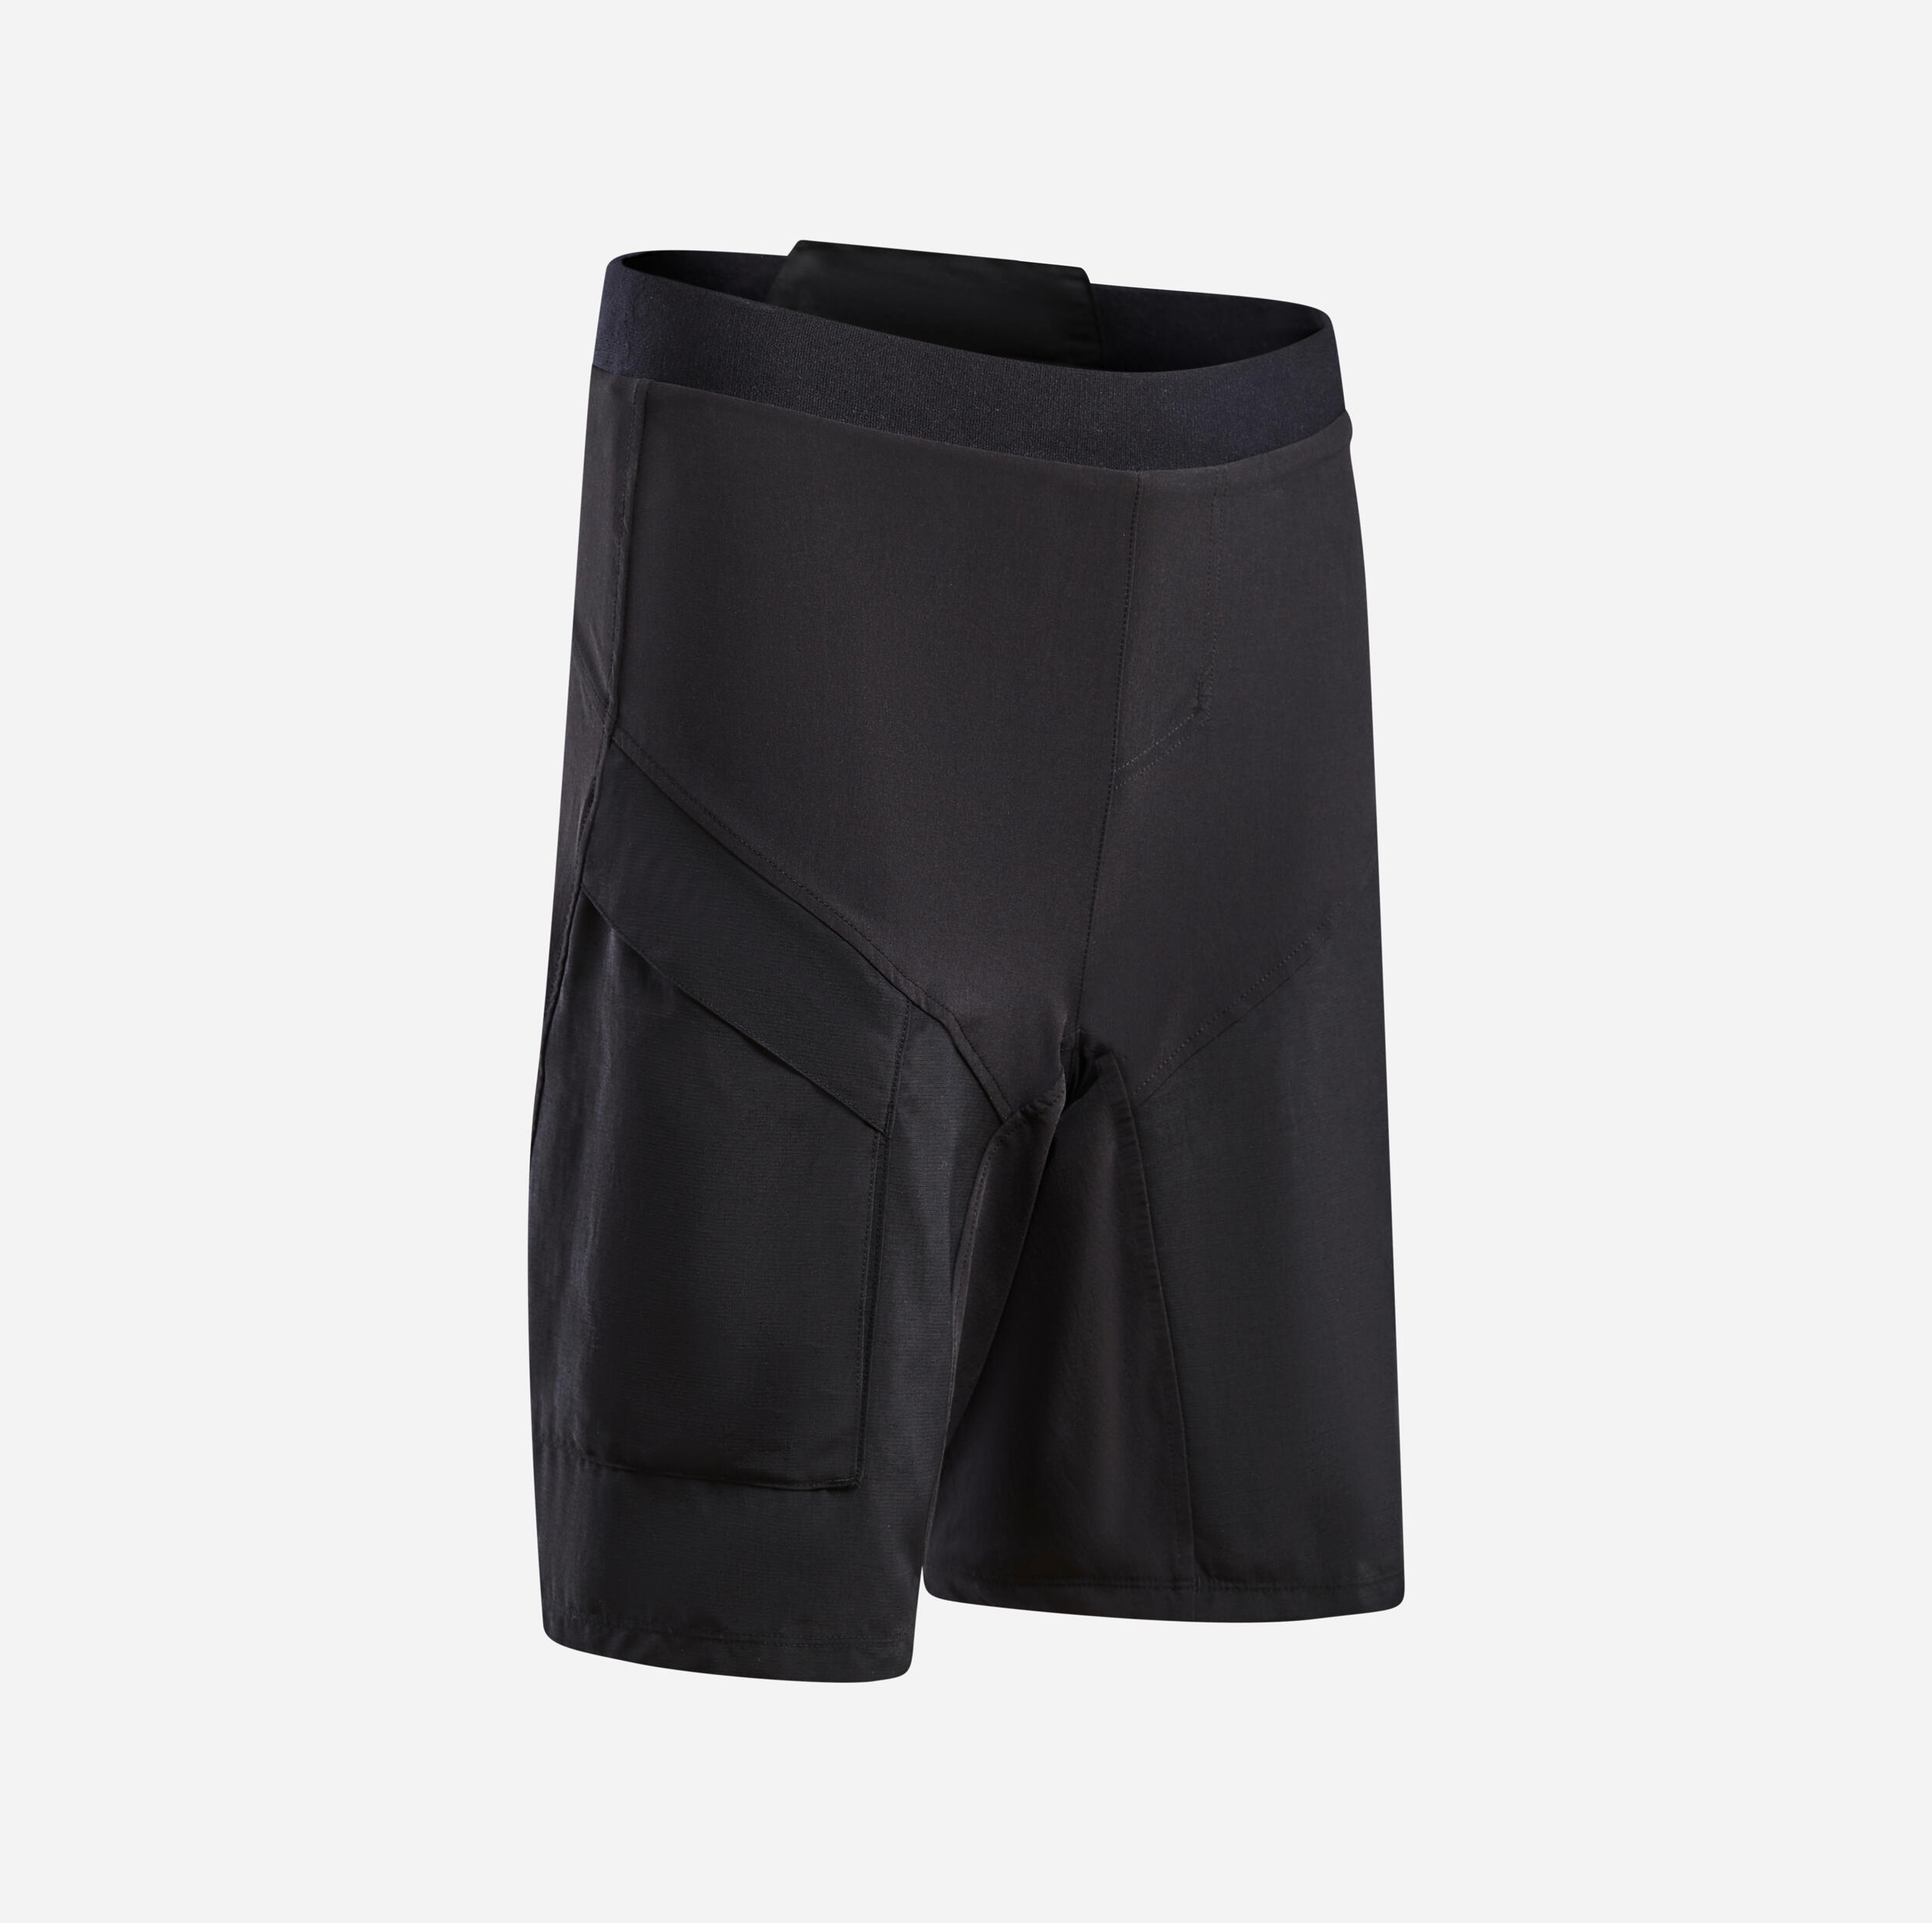 500 Kids' Mountain Bike Shorts - Black 1/4